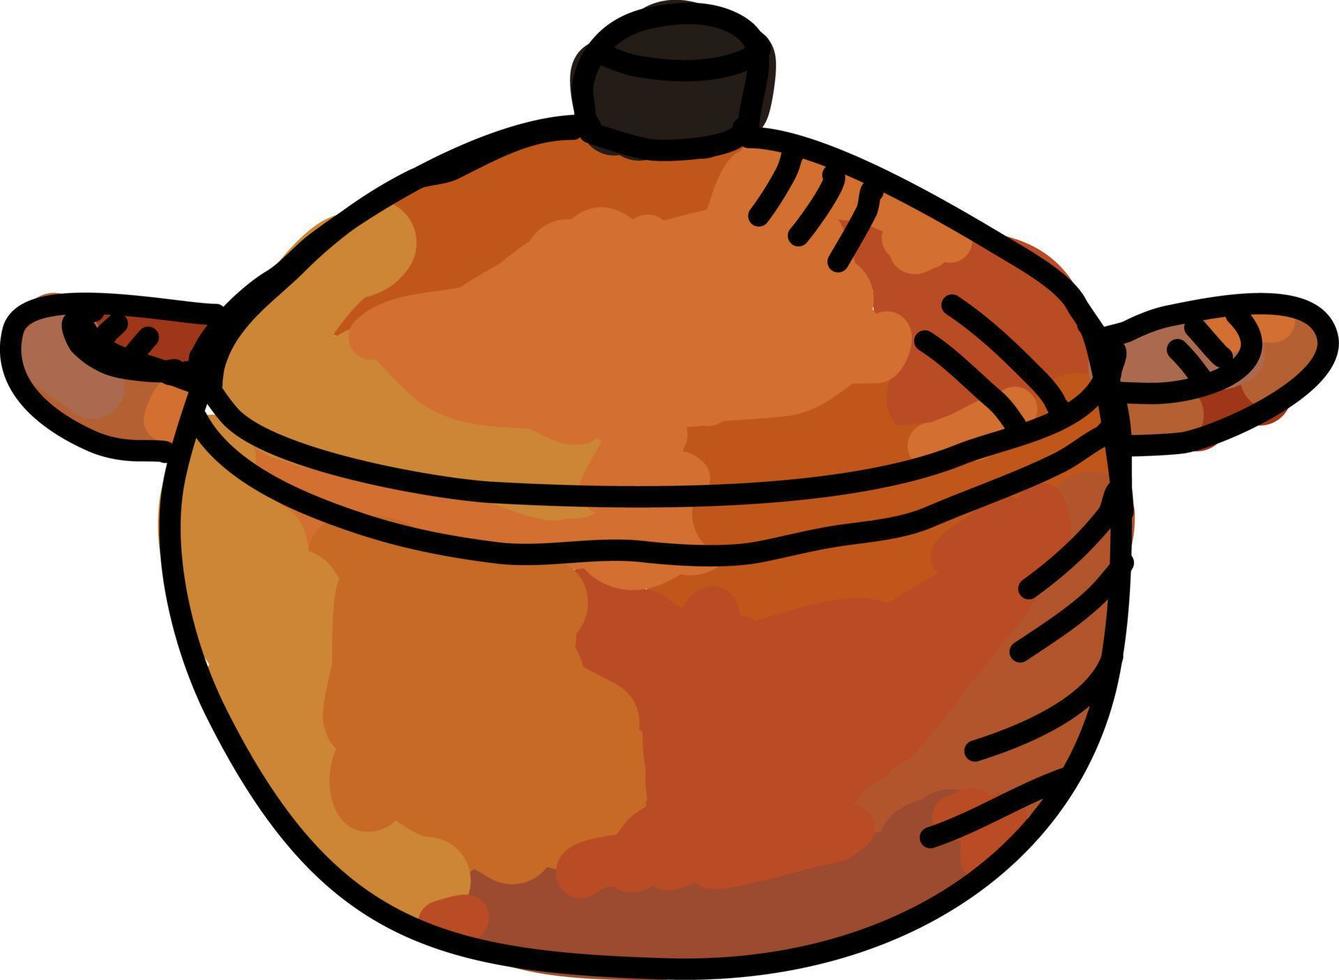 Casserole dish, illustration, vector on white background.